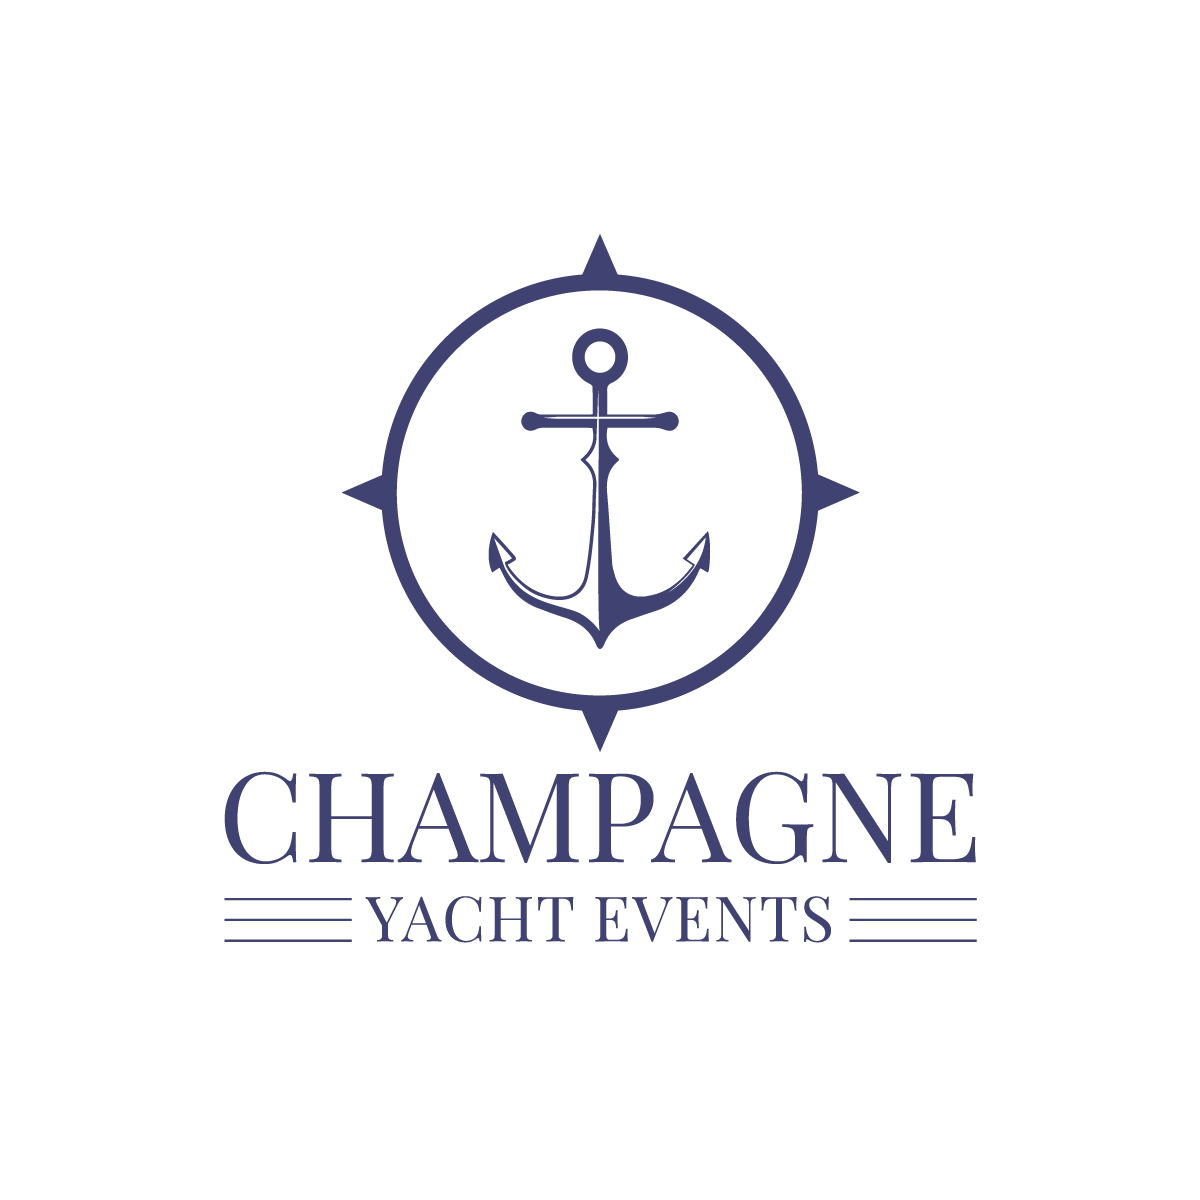 Champagne yacht